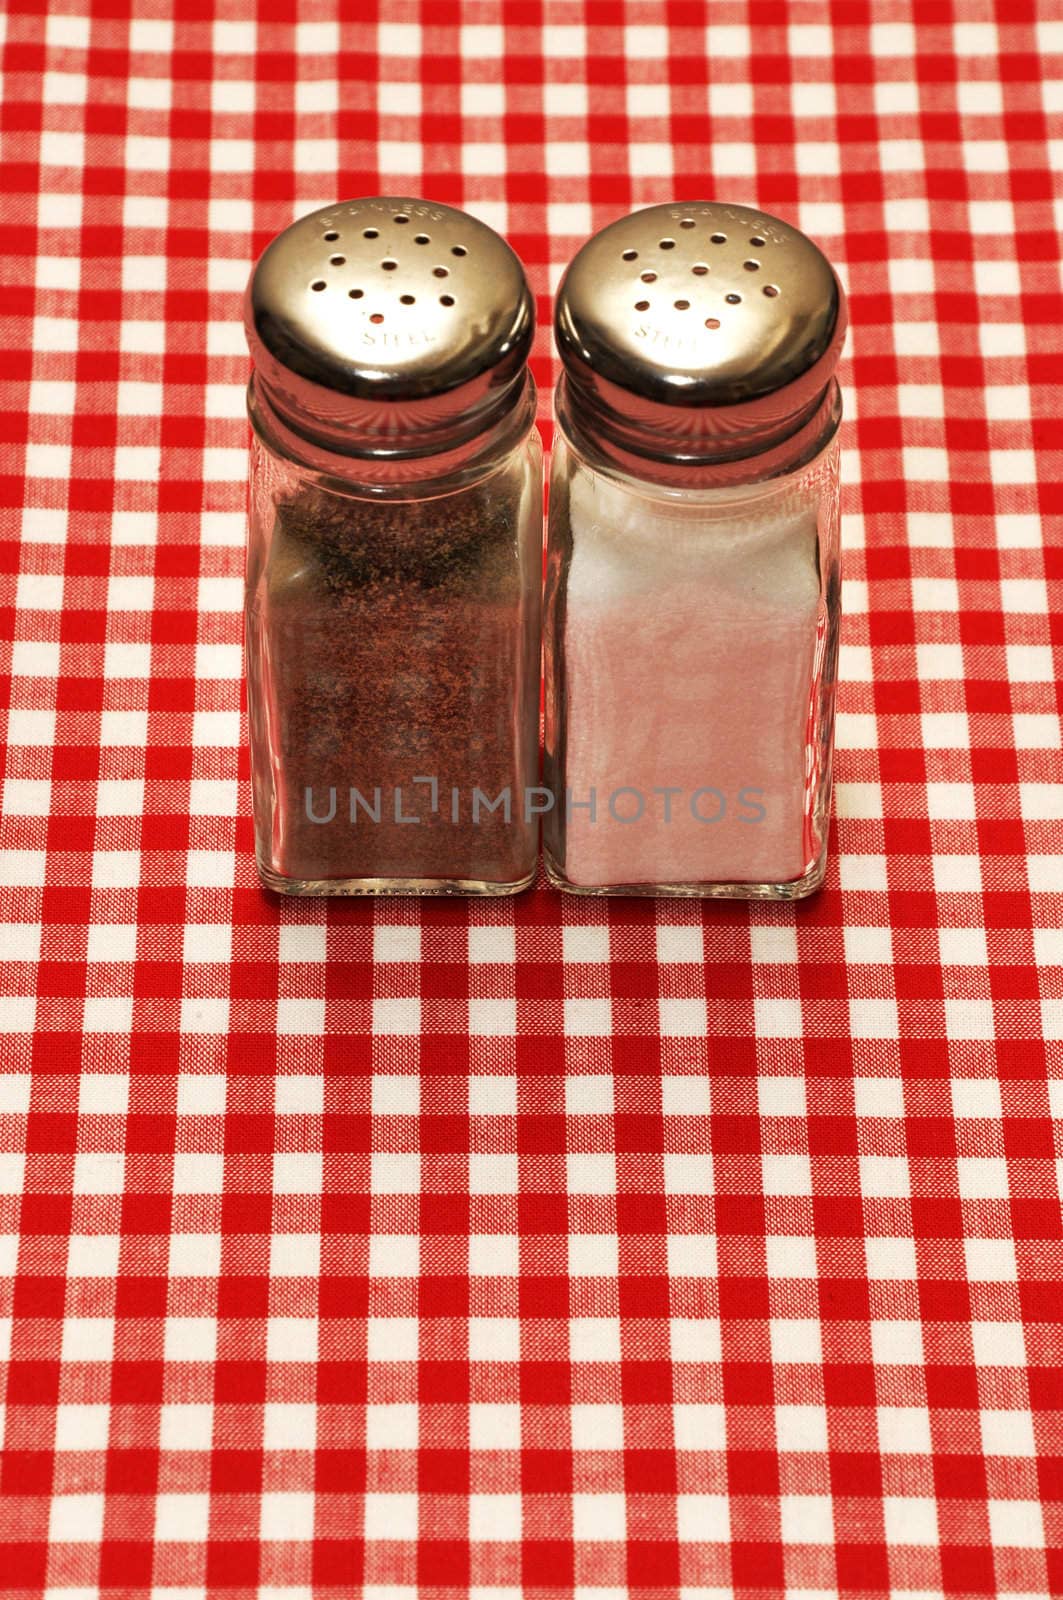 Salt and Pepper by dehooks